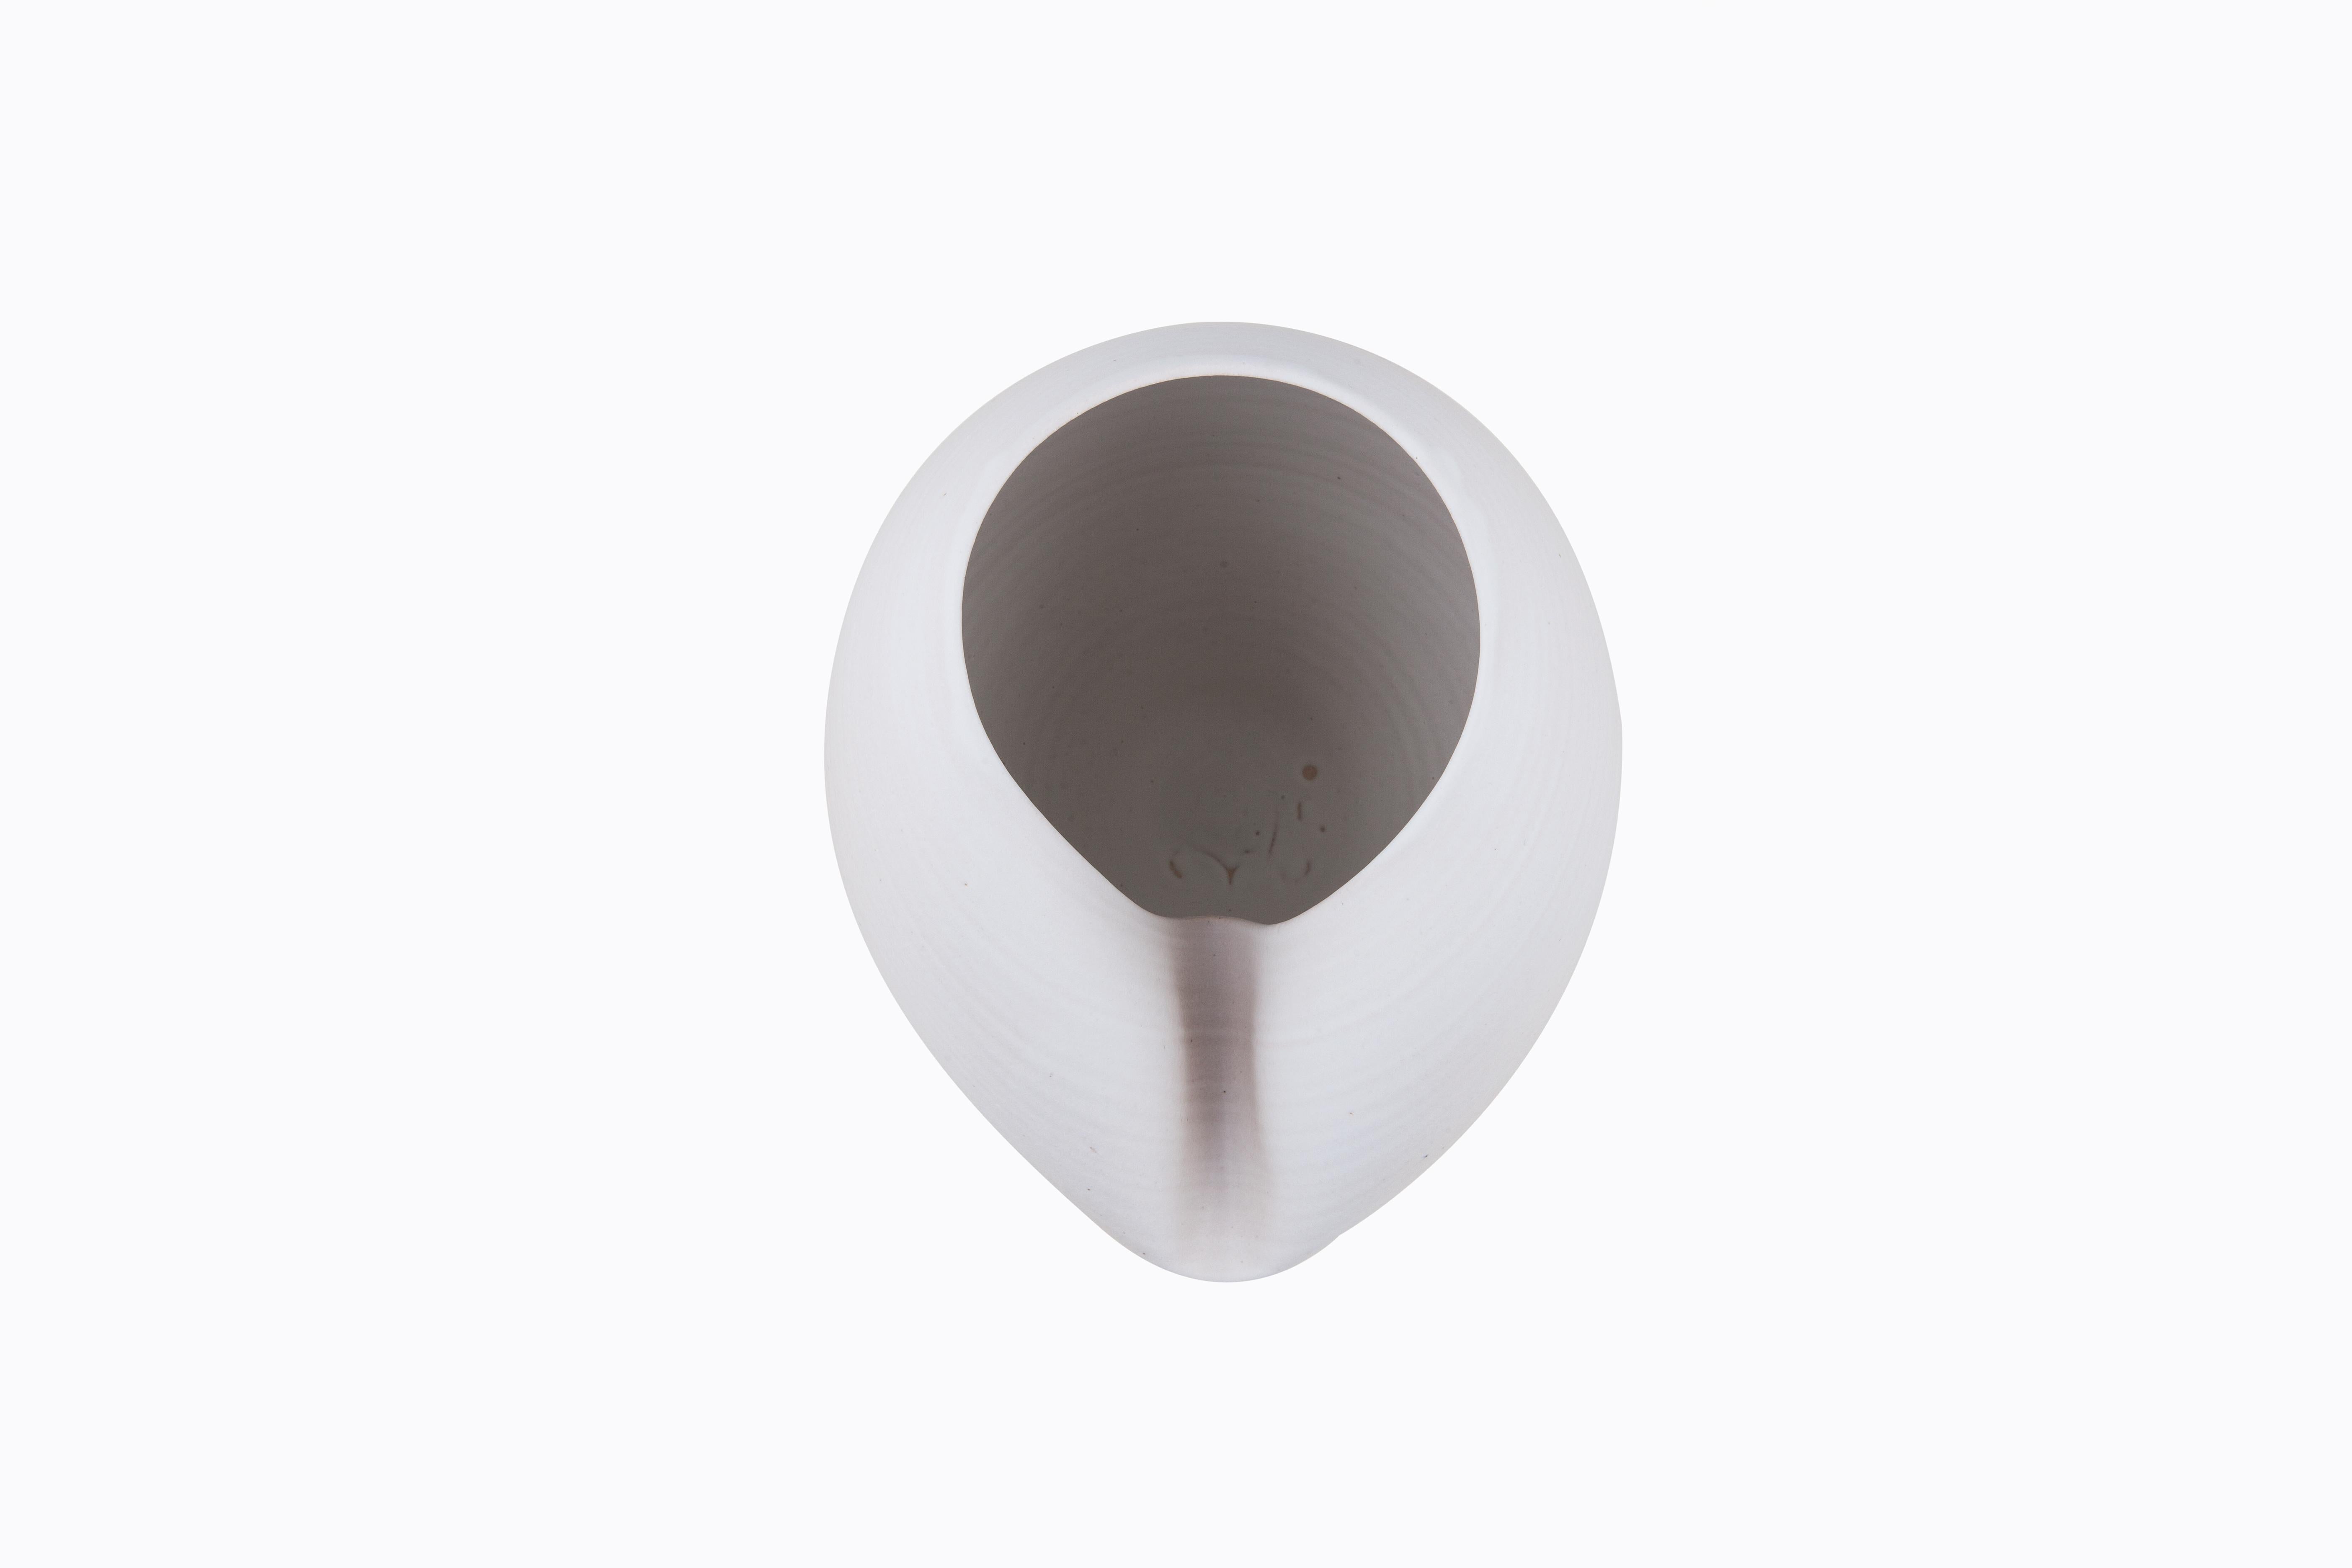 Contemporary White Oval Form, Vase, Interior Sculpture or Vessel, Objet D'Art